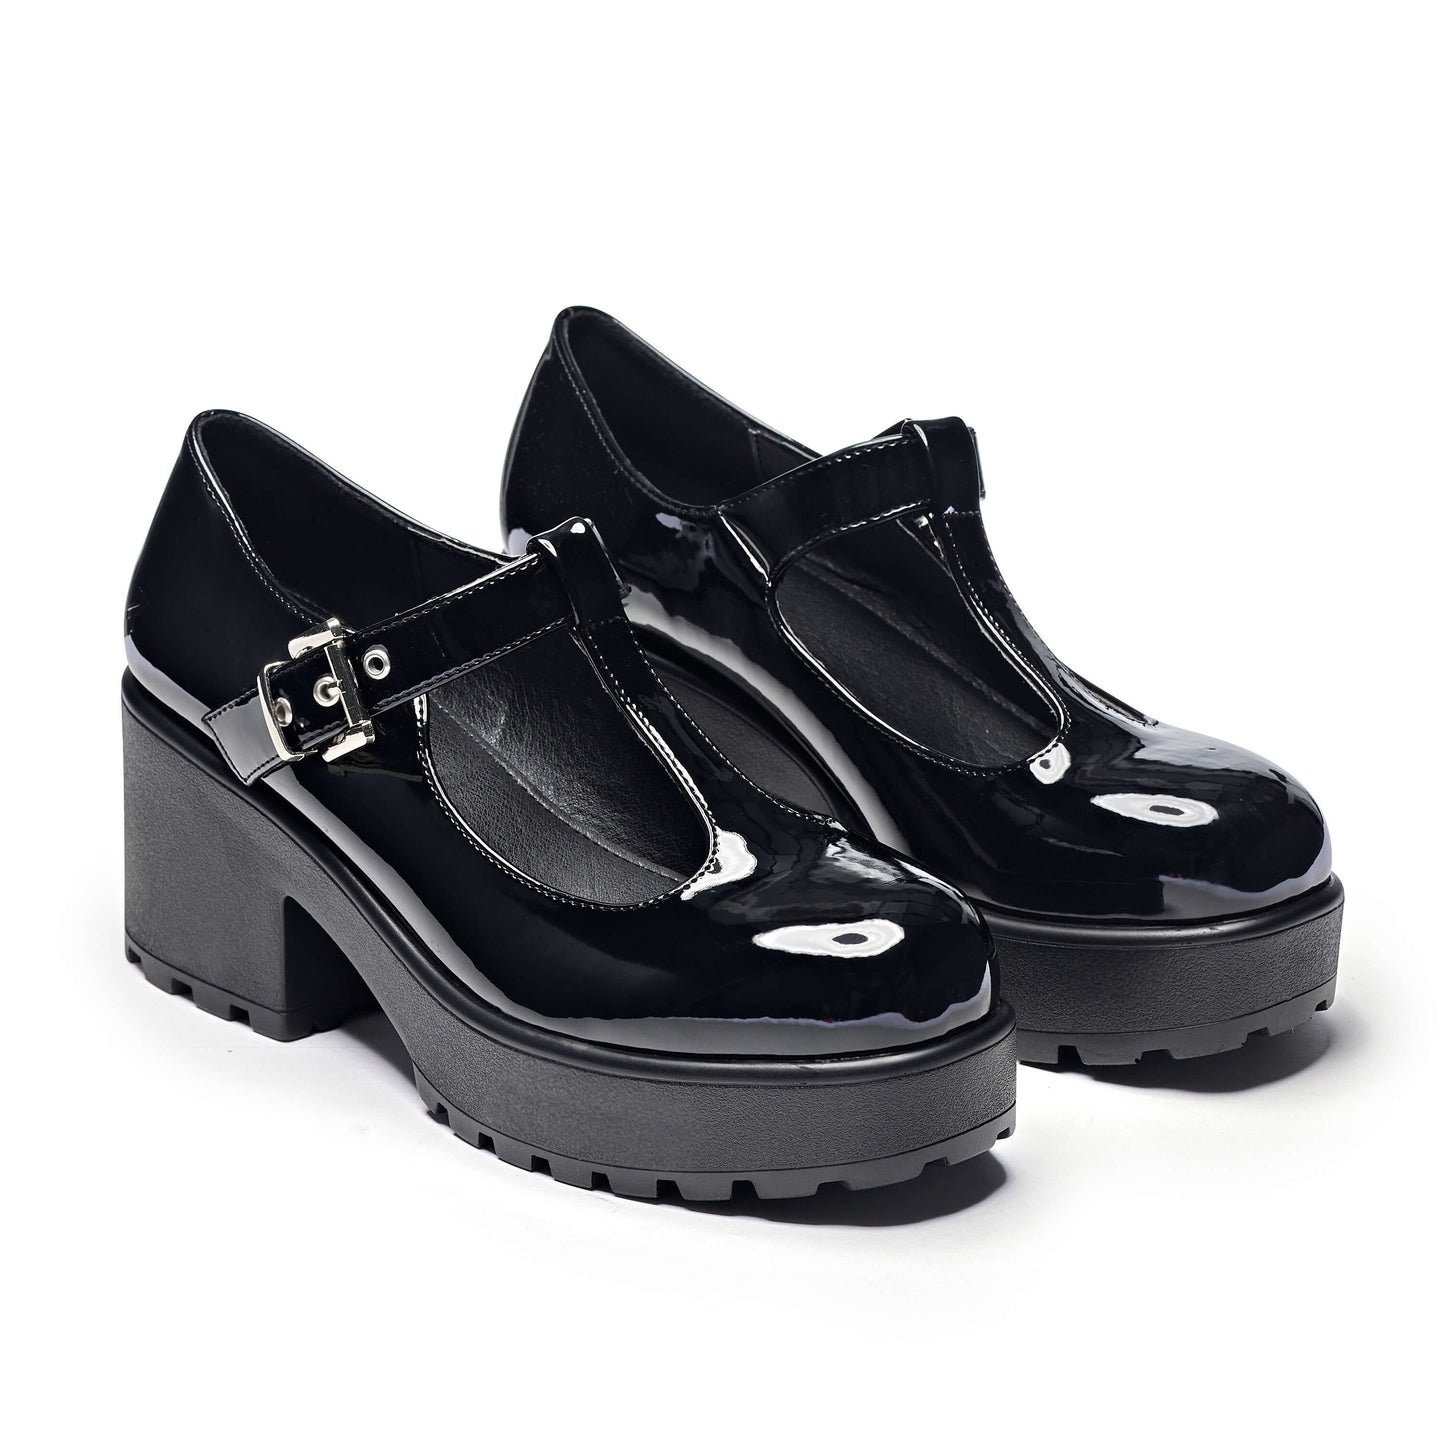 SAI Black Mary Jane Shoes 'Patent Edition' - Mary Janes - KOI Footwear - Black - Three-Quarter View